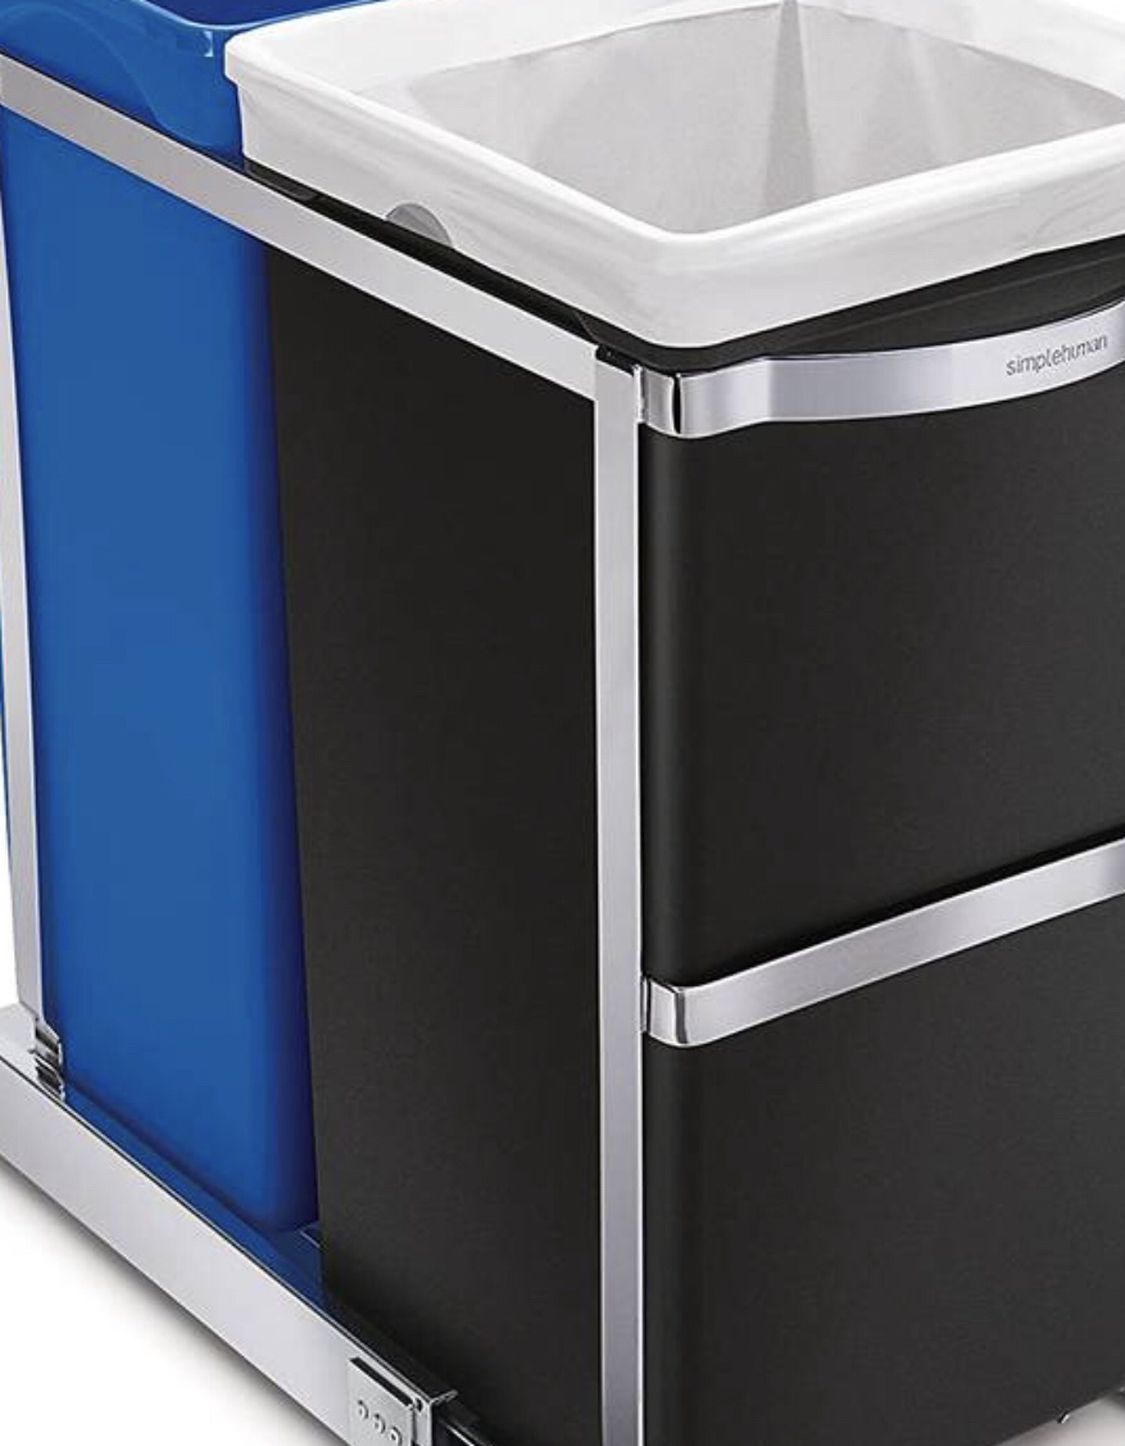 SimpleHuman Dual Compartment Under Counter Trash Bin - New!